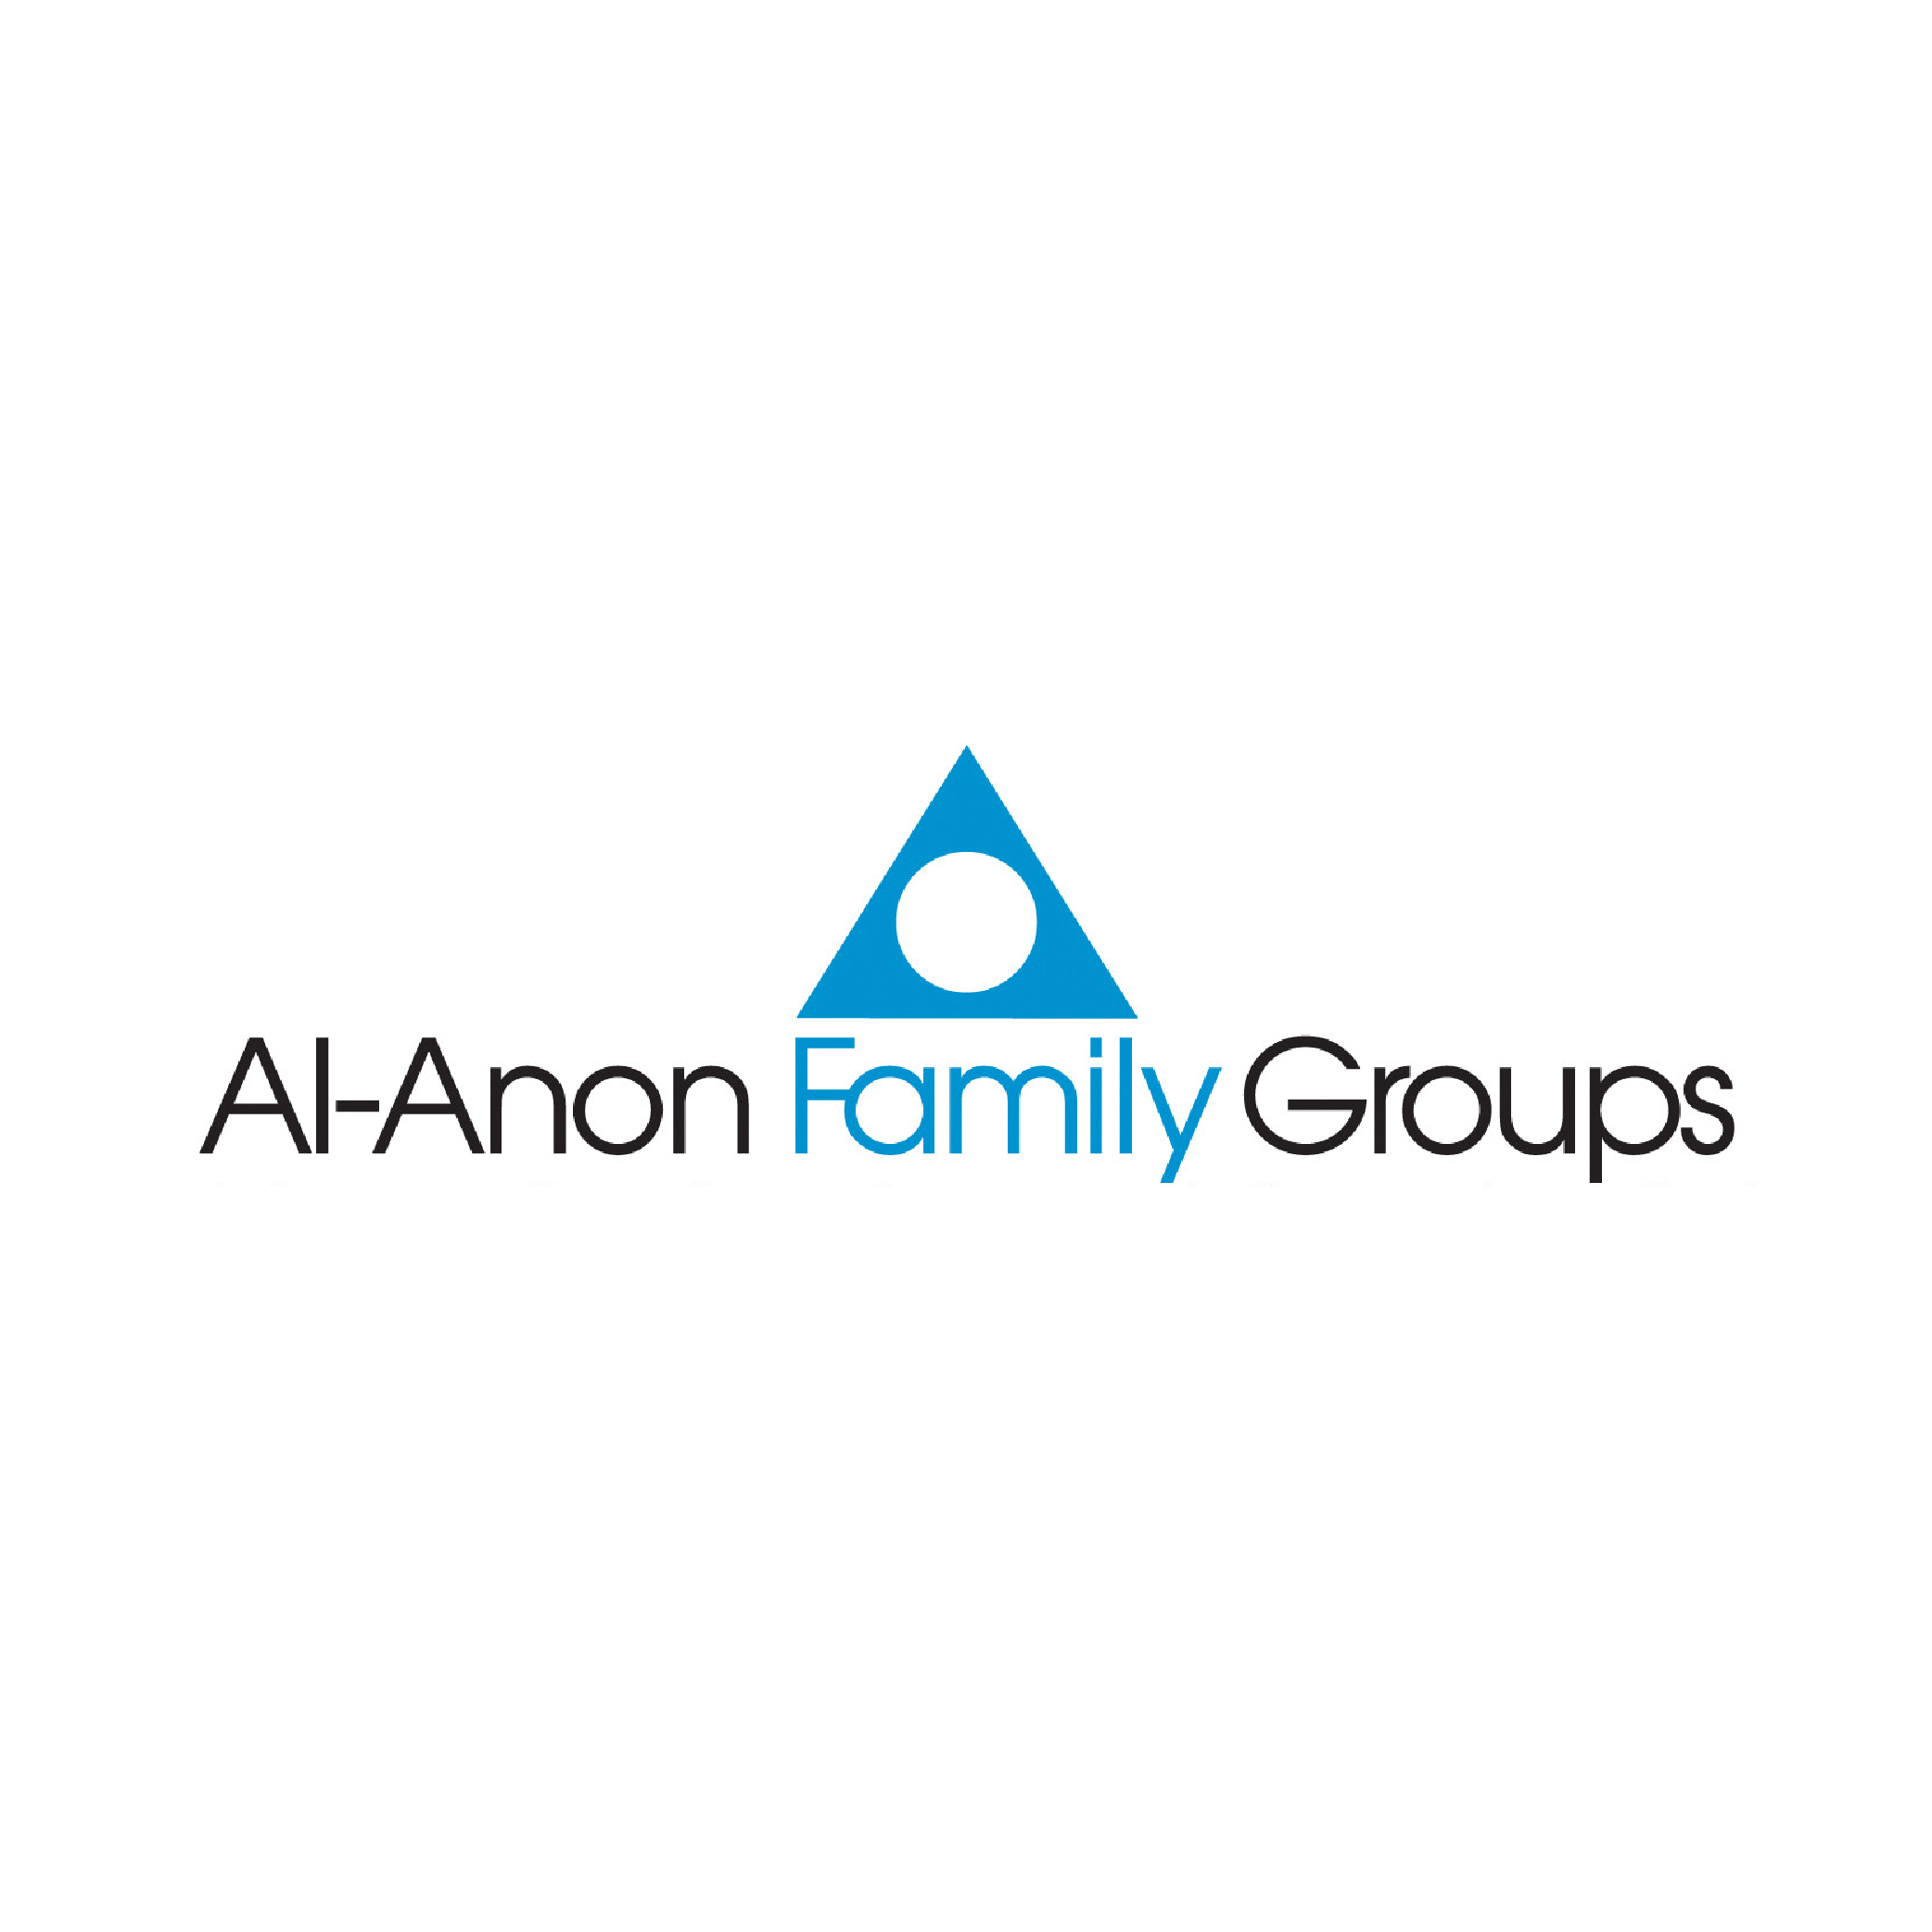 Logótipo dos grupos familiares Al-Anon